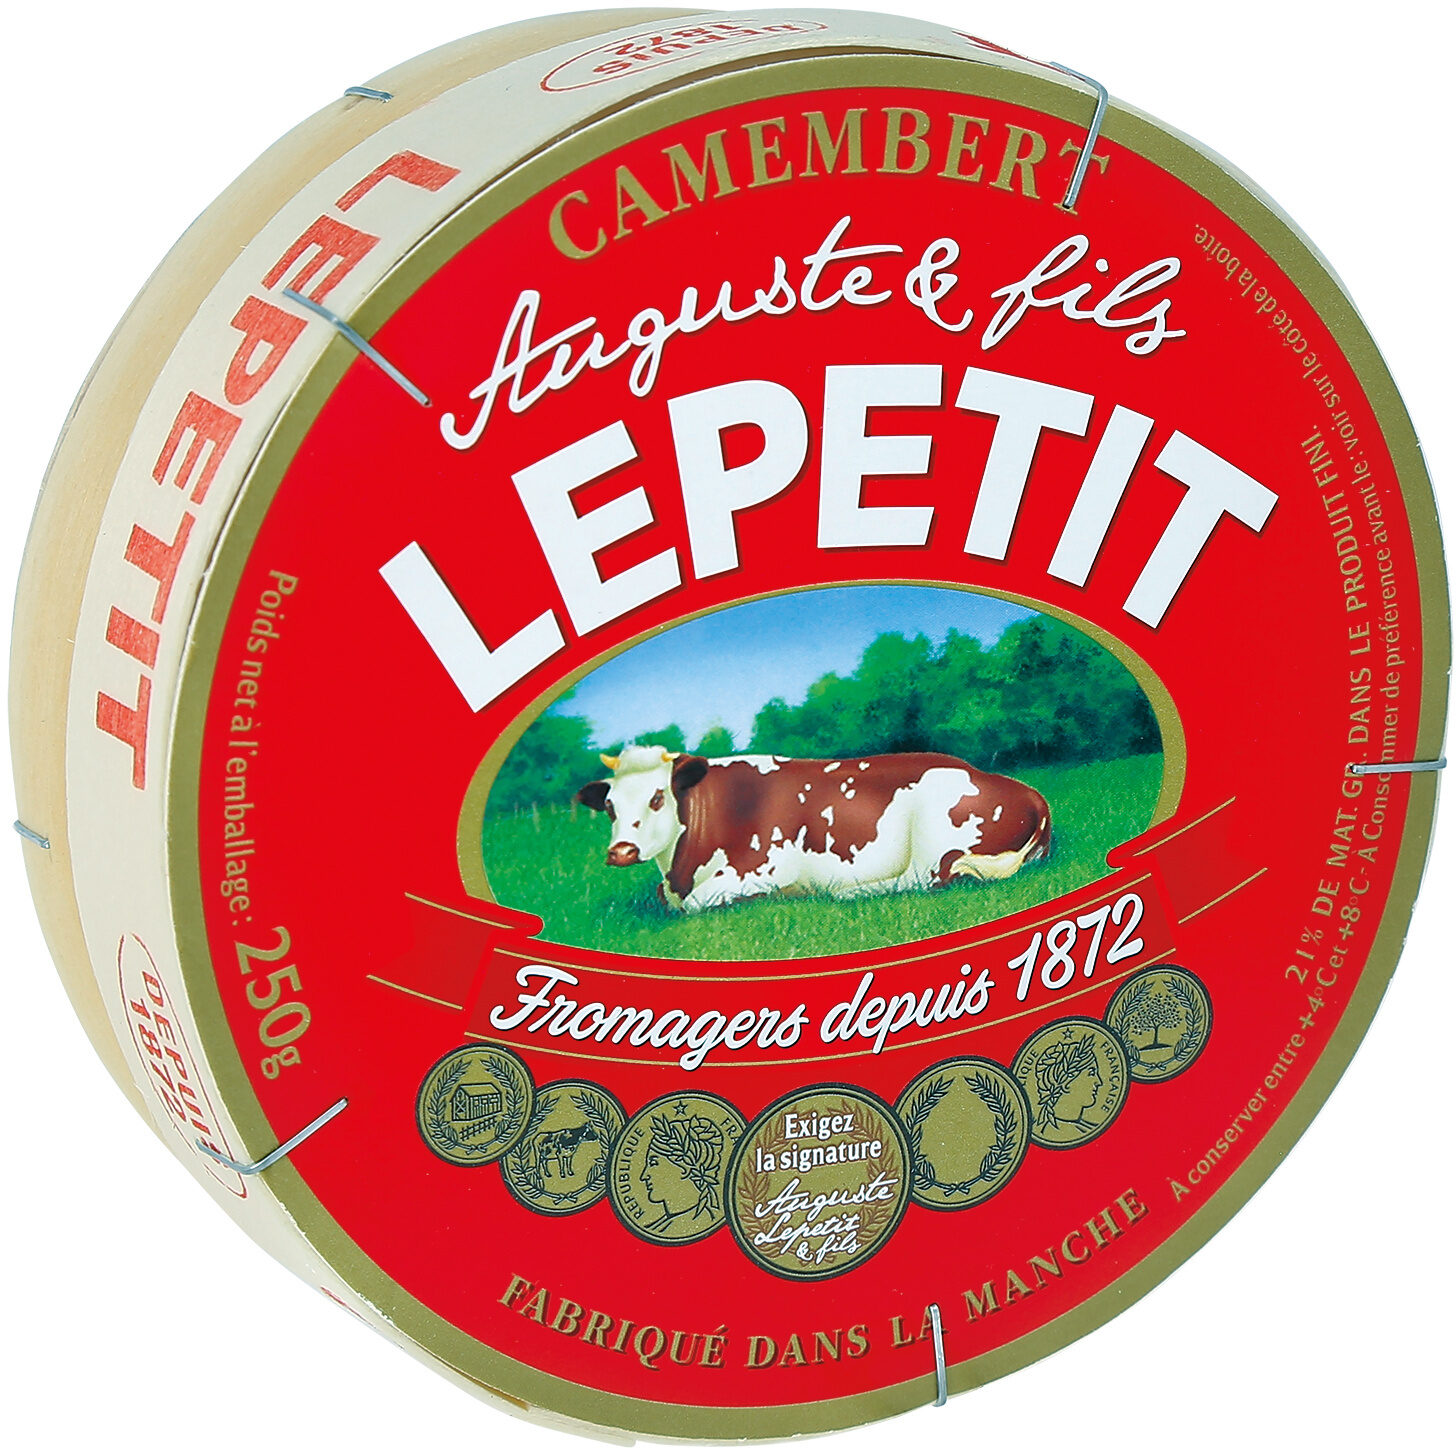 Camembert lepetit 250g 21% - Product - fr